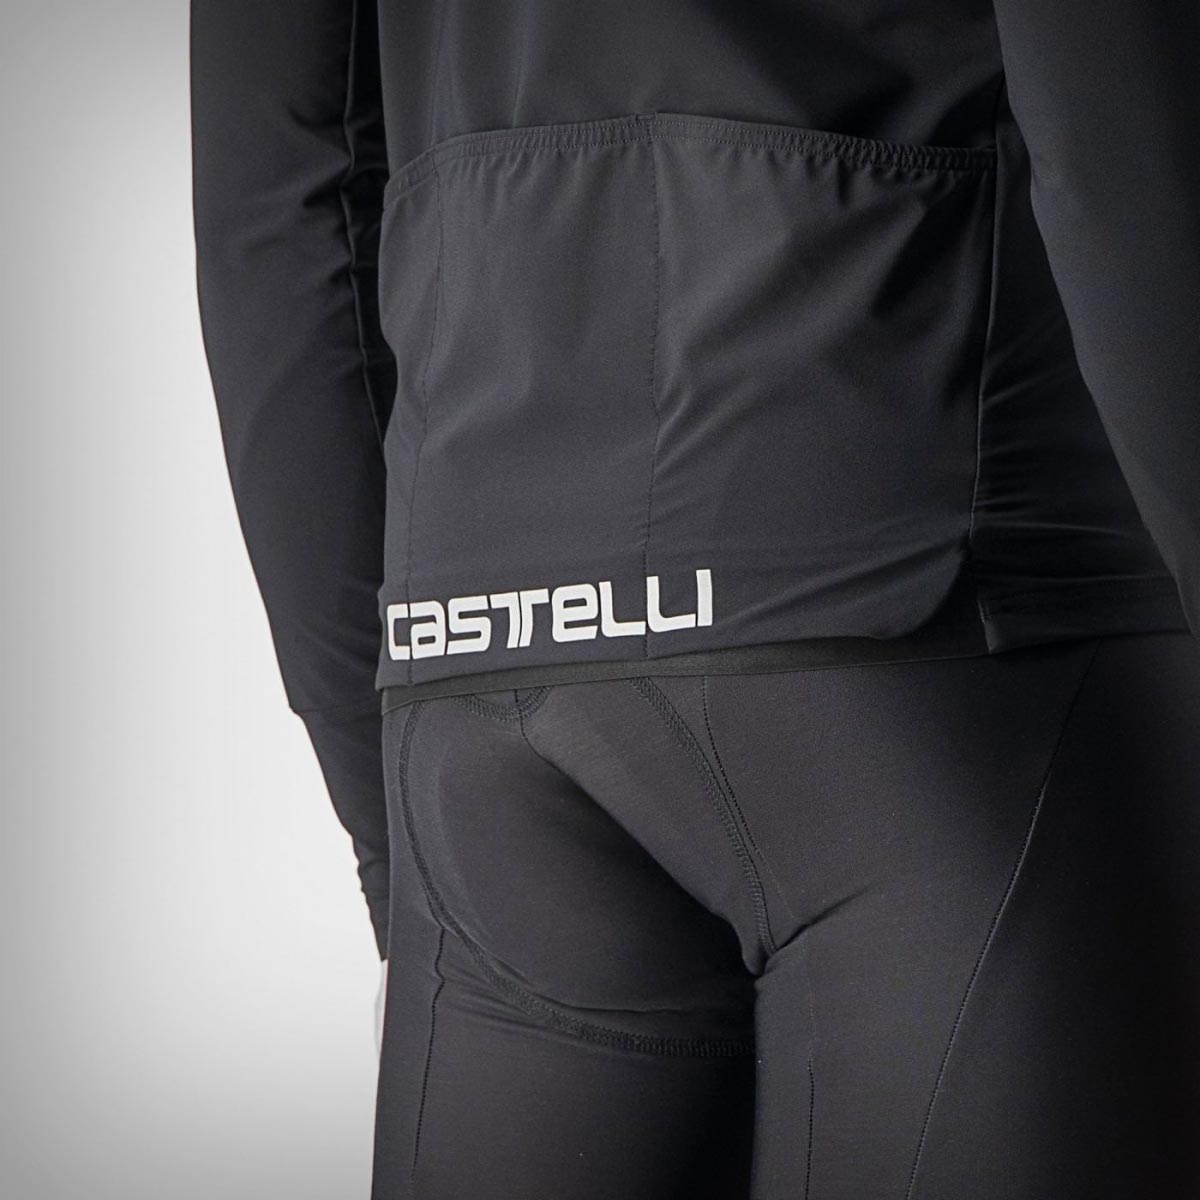 Castelli presenta el Flight Air, un maillot aerodinámico e impermeable para otoño y primavera